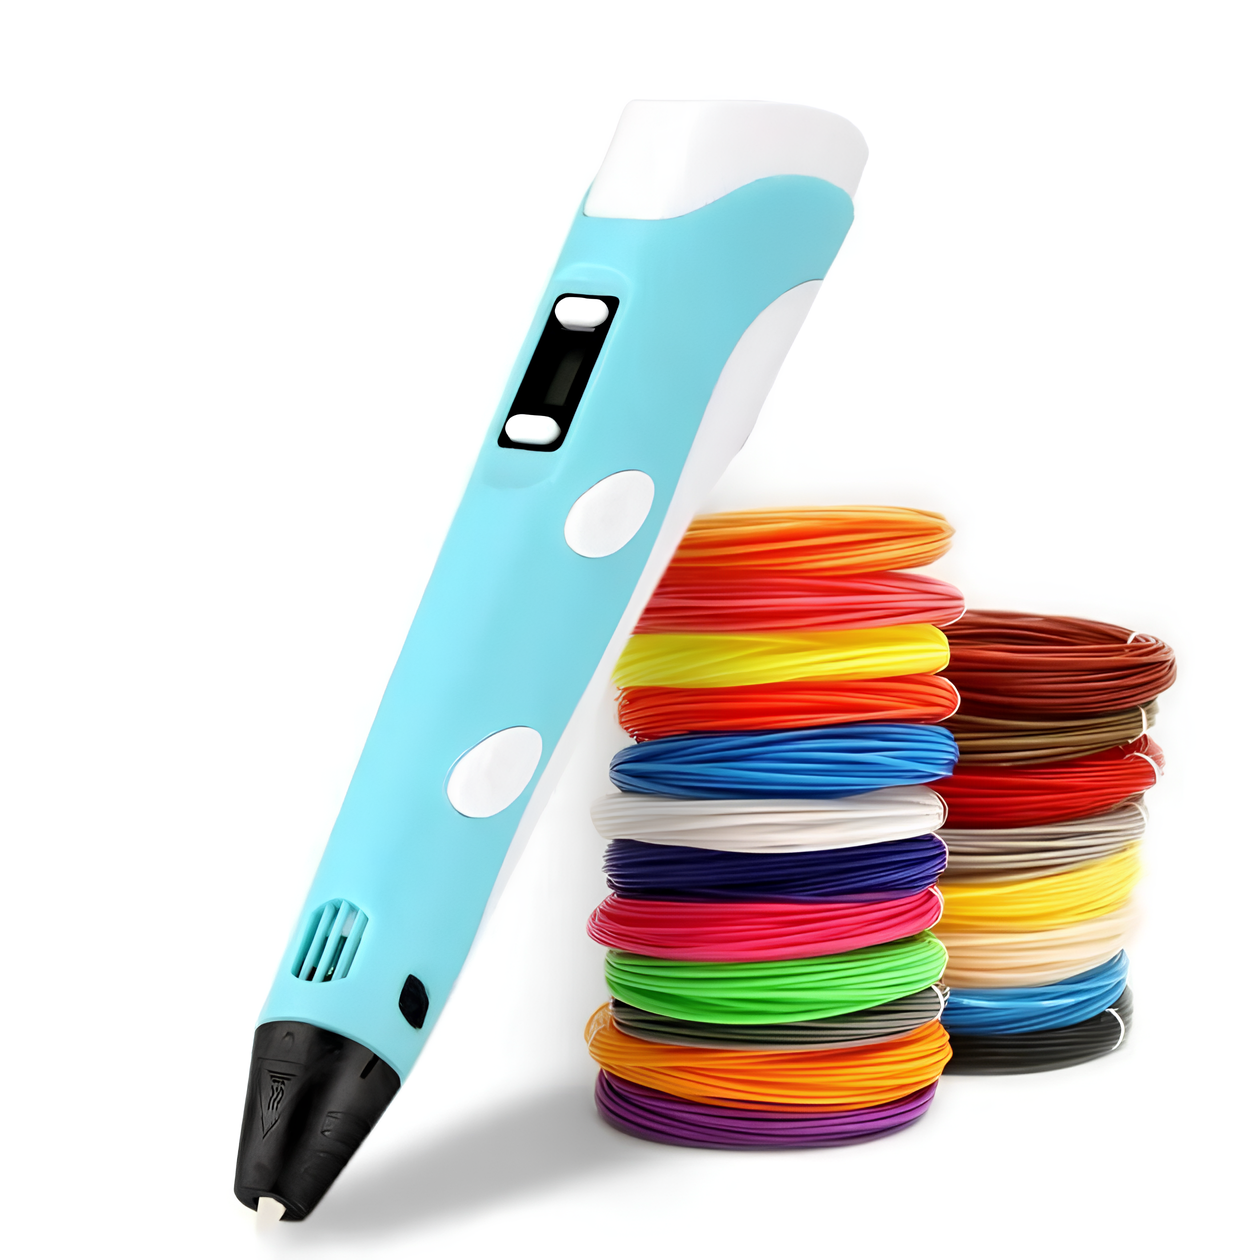 Ручка 3Д для творчества с LCD дисплеем 100 м пластика Голубой (00122)